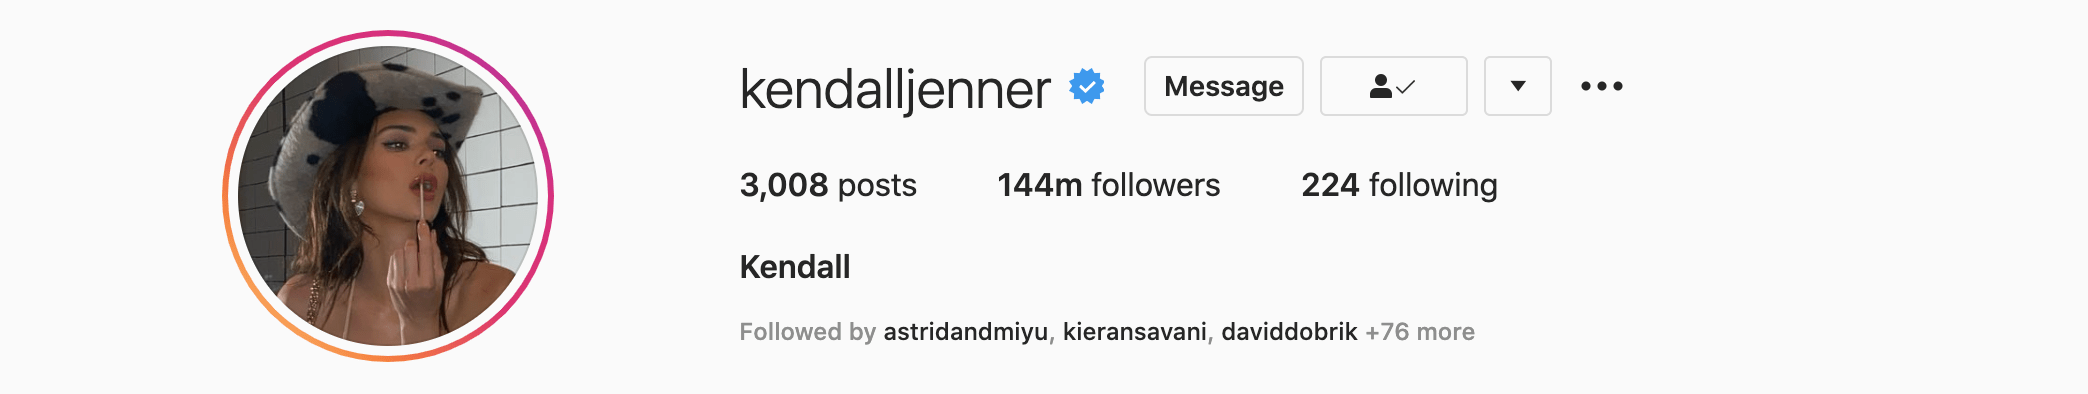 Top Instagram Influencers - KENDALL JENNER